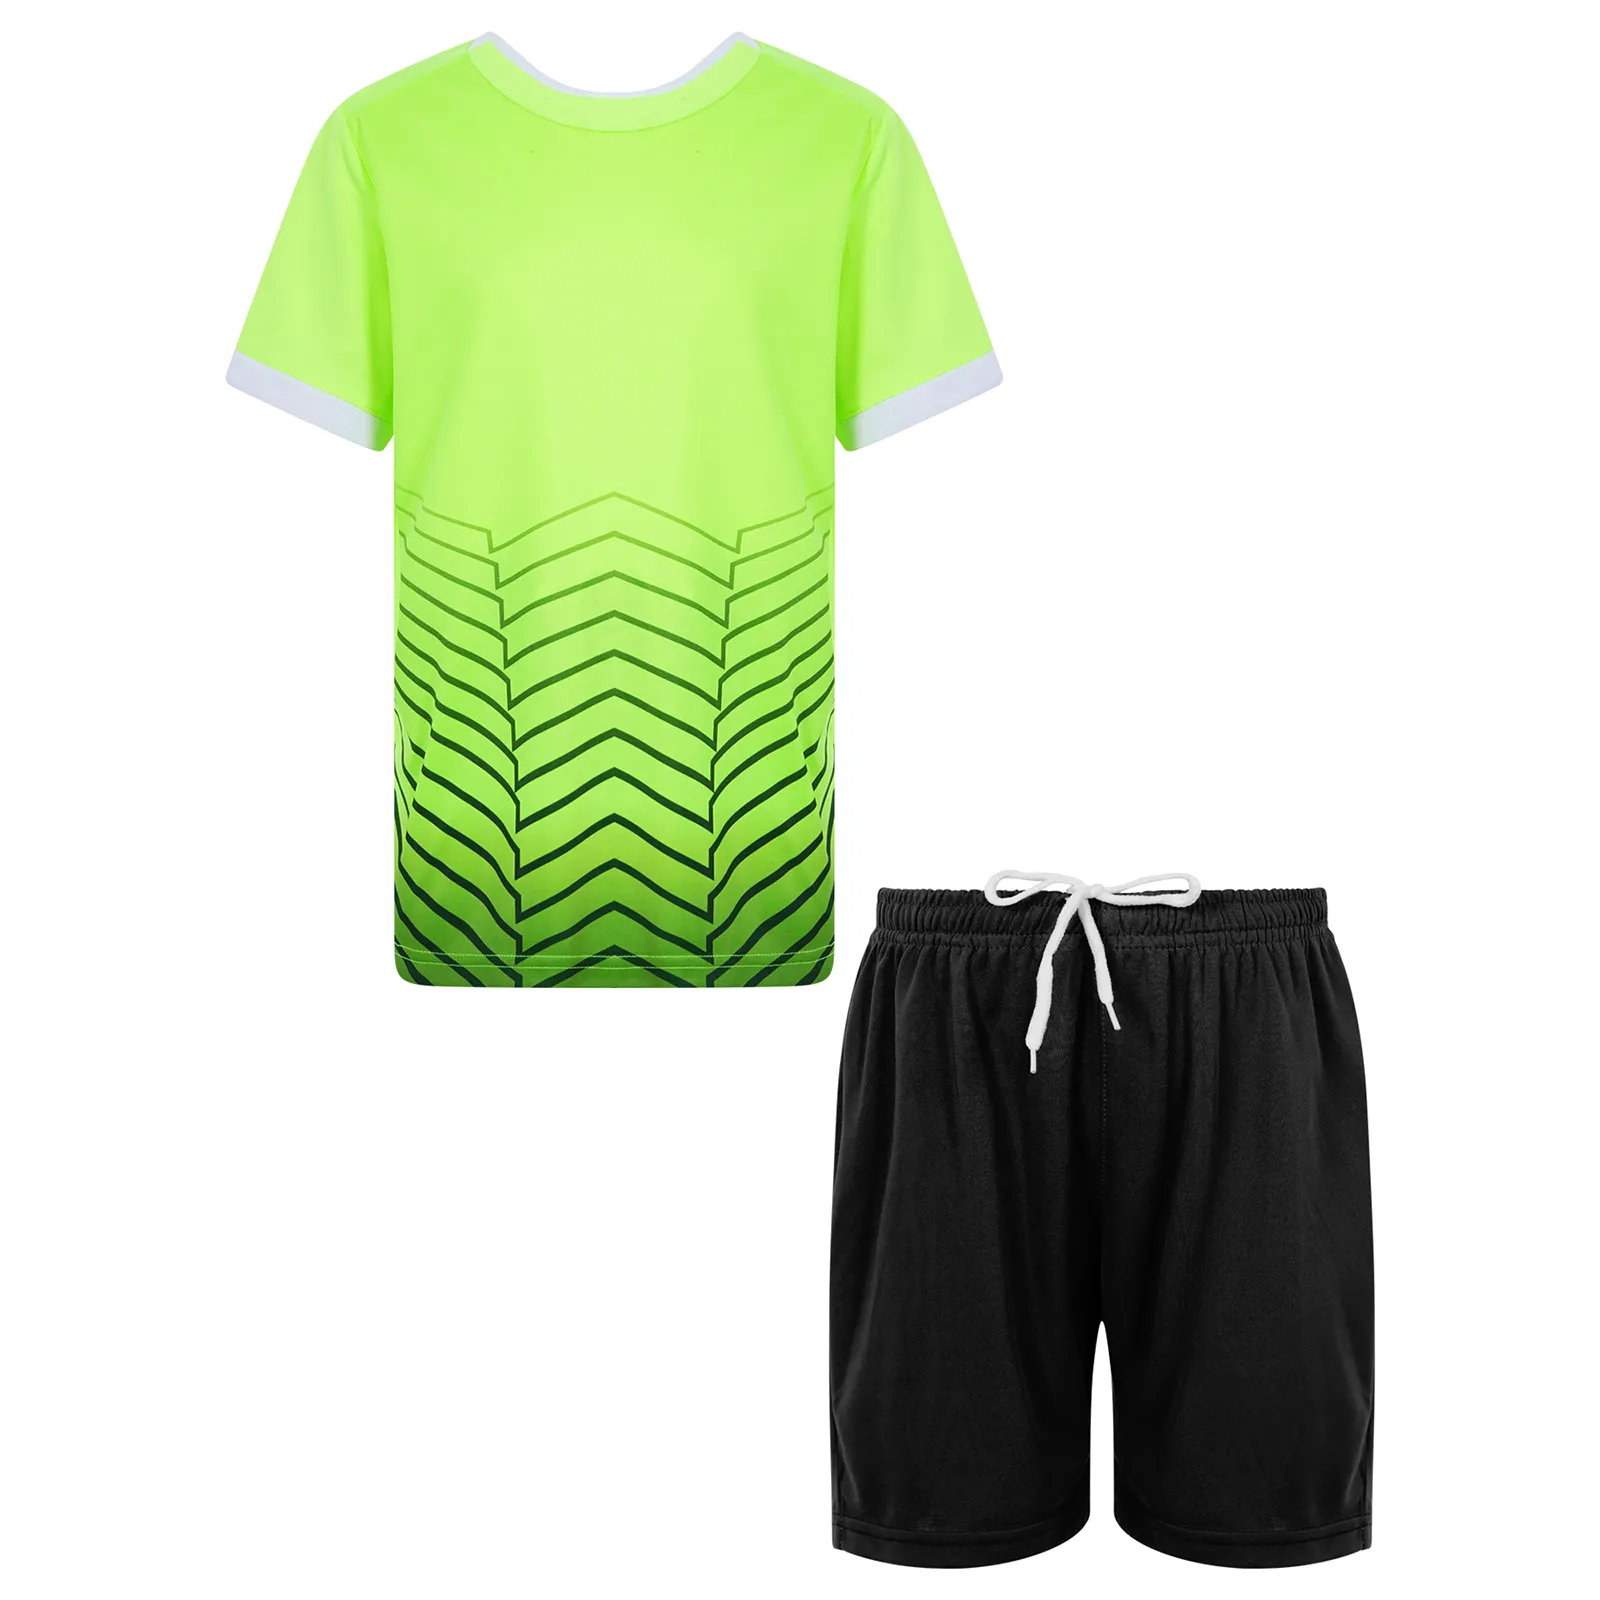 Kinder Jungen Mädchen Fußball Kleidung Set Fußball Training Uniform Sporta nzug Kurzarm Atmungsaktives T-Shirt mit Shorts Sportswear